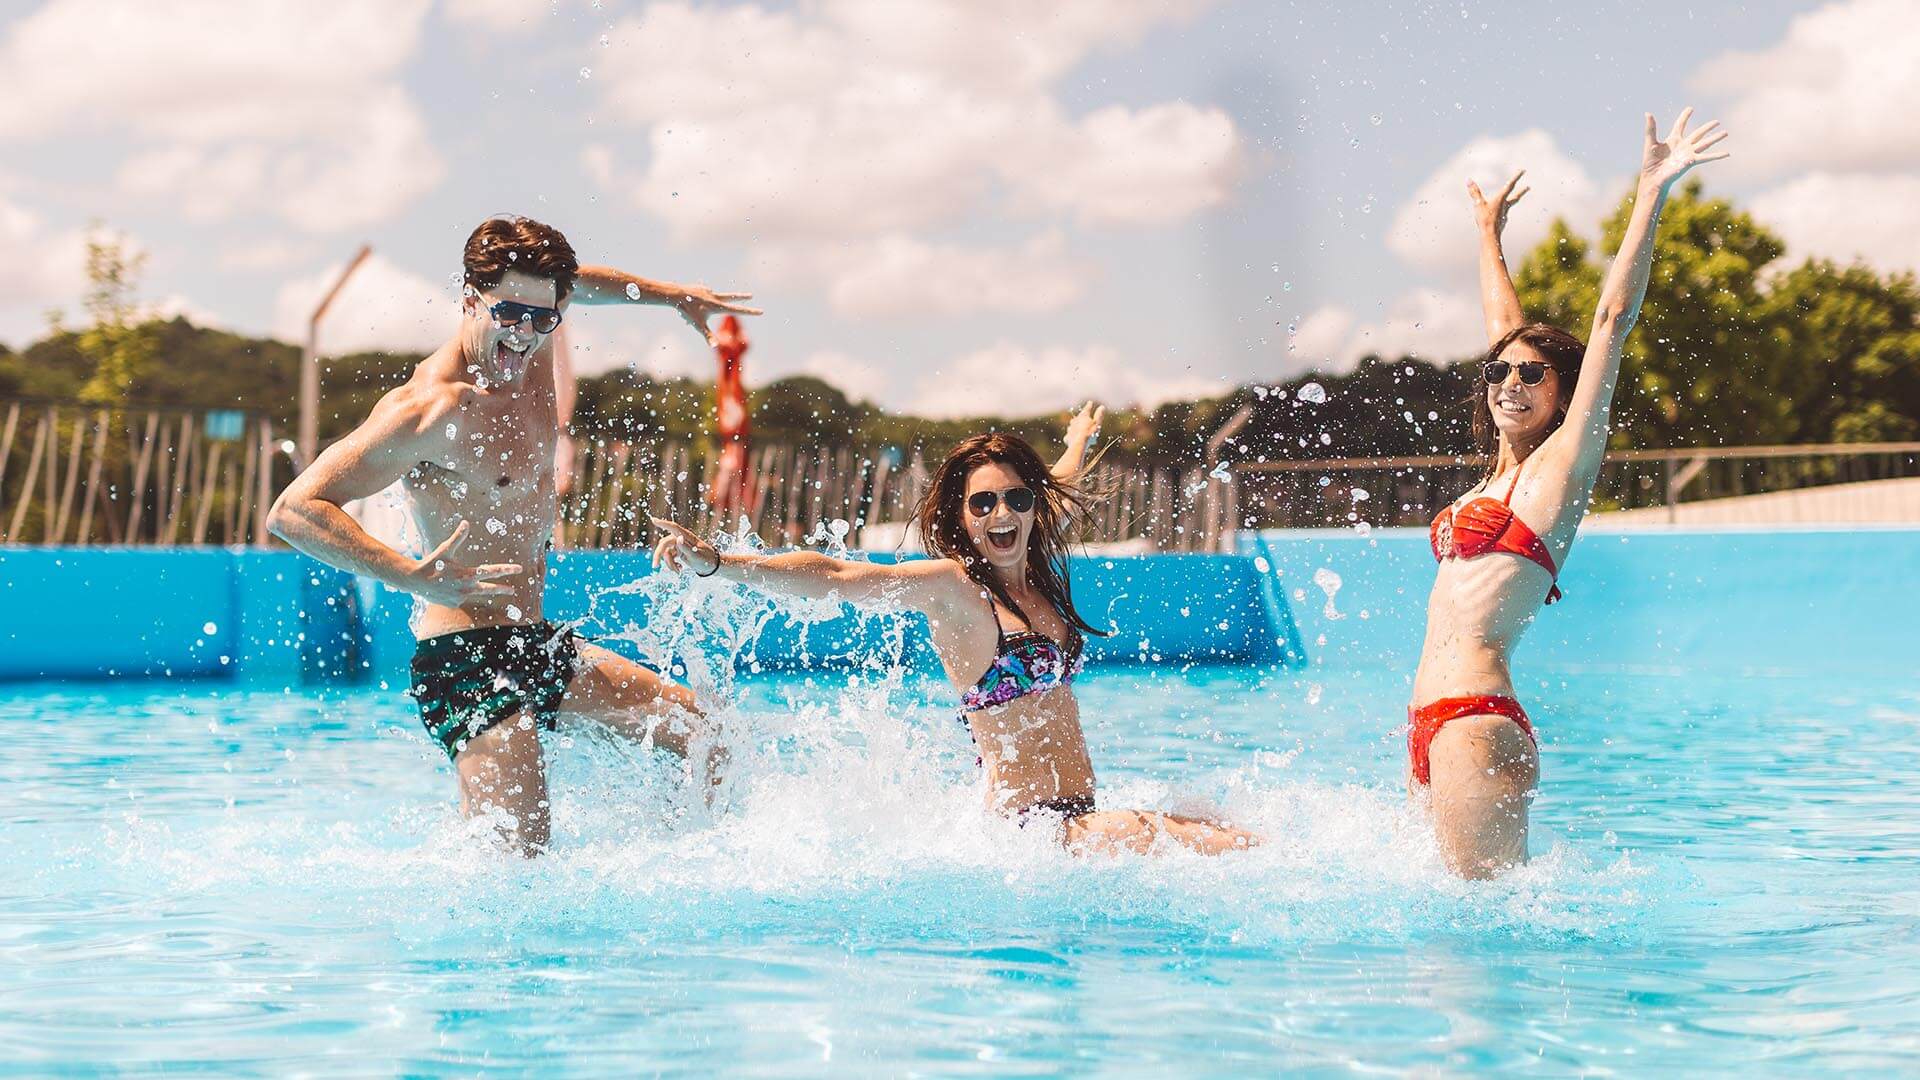 carol mertens recommends Water Slide Bikini Top